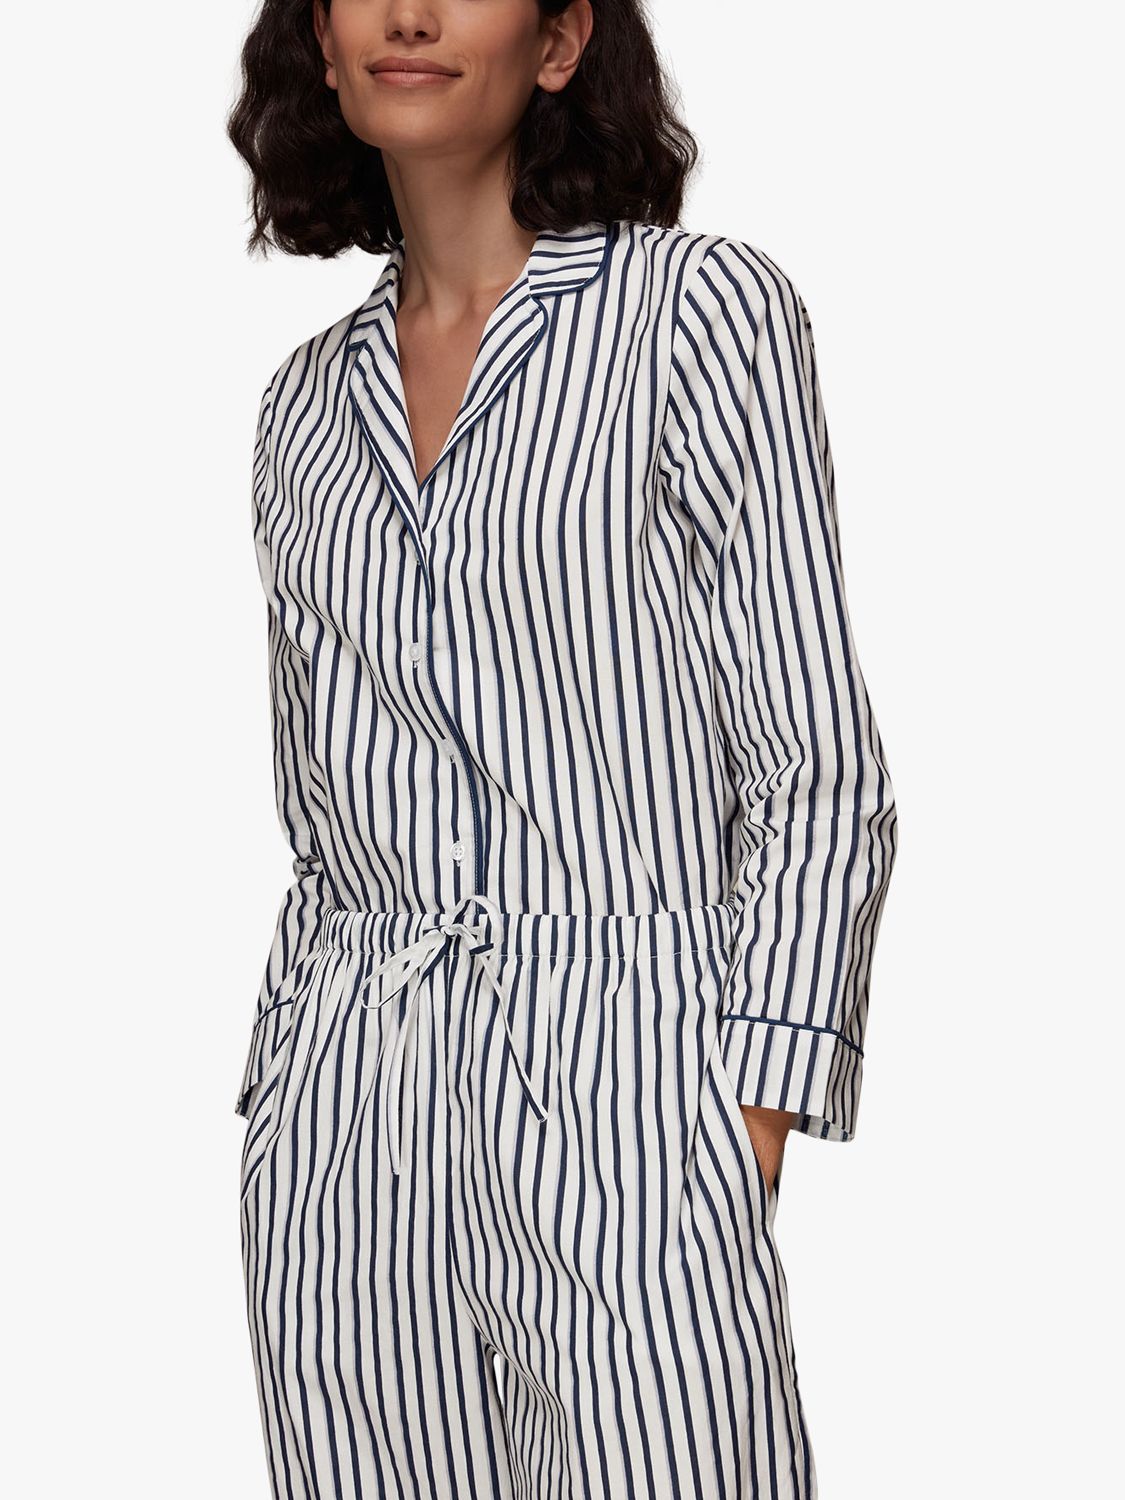 Buy Whistles Winter Striped Pyjamas, White/Navy Online at johnlewis.com